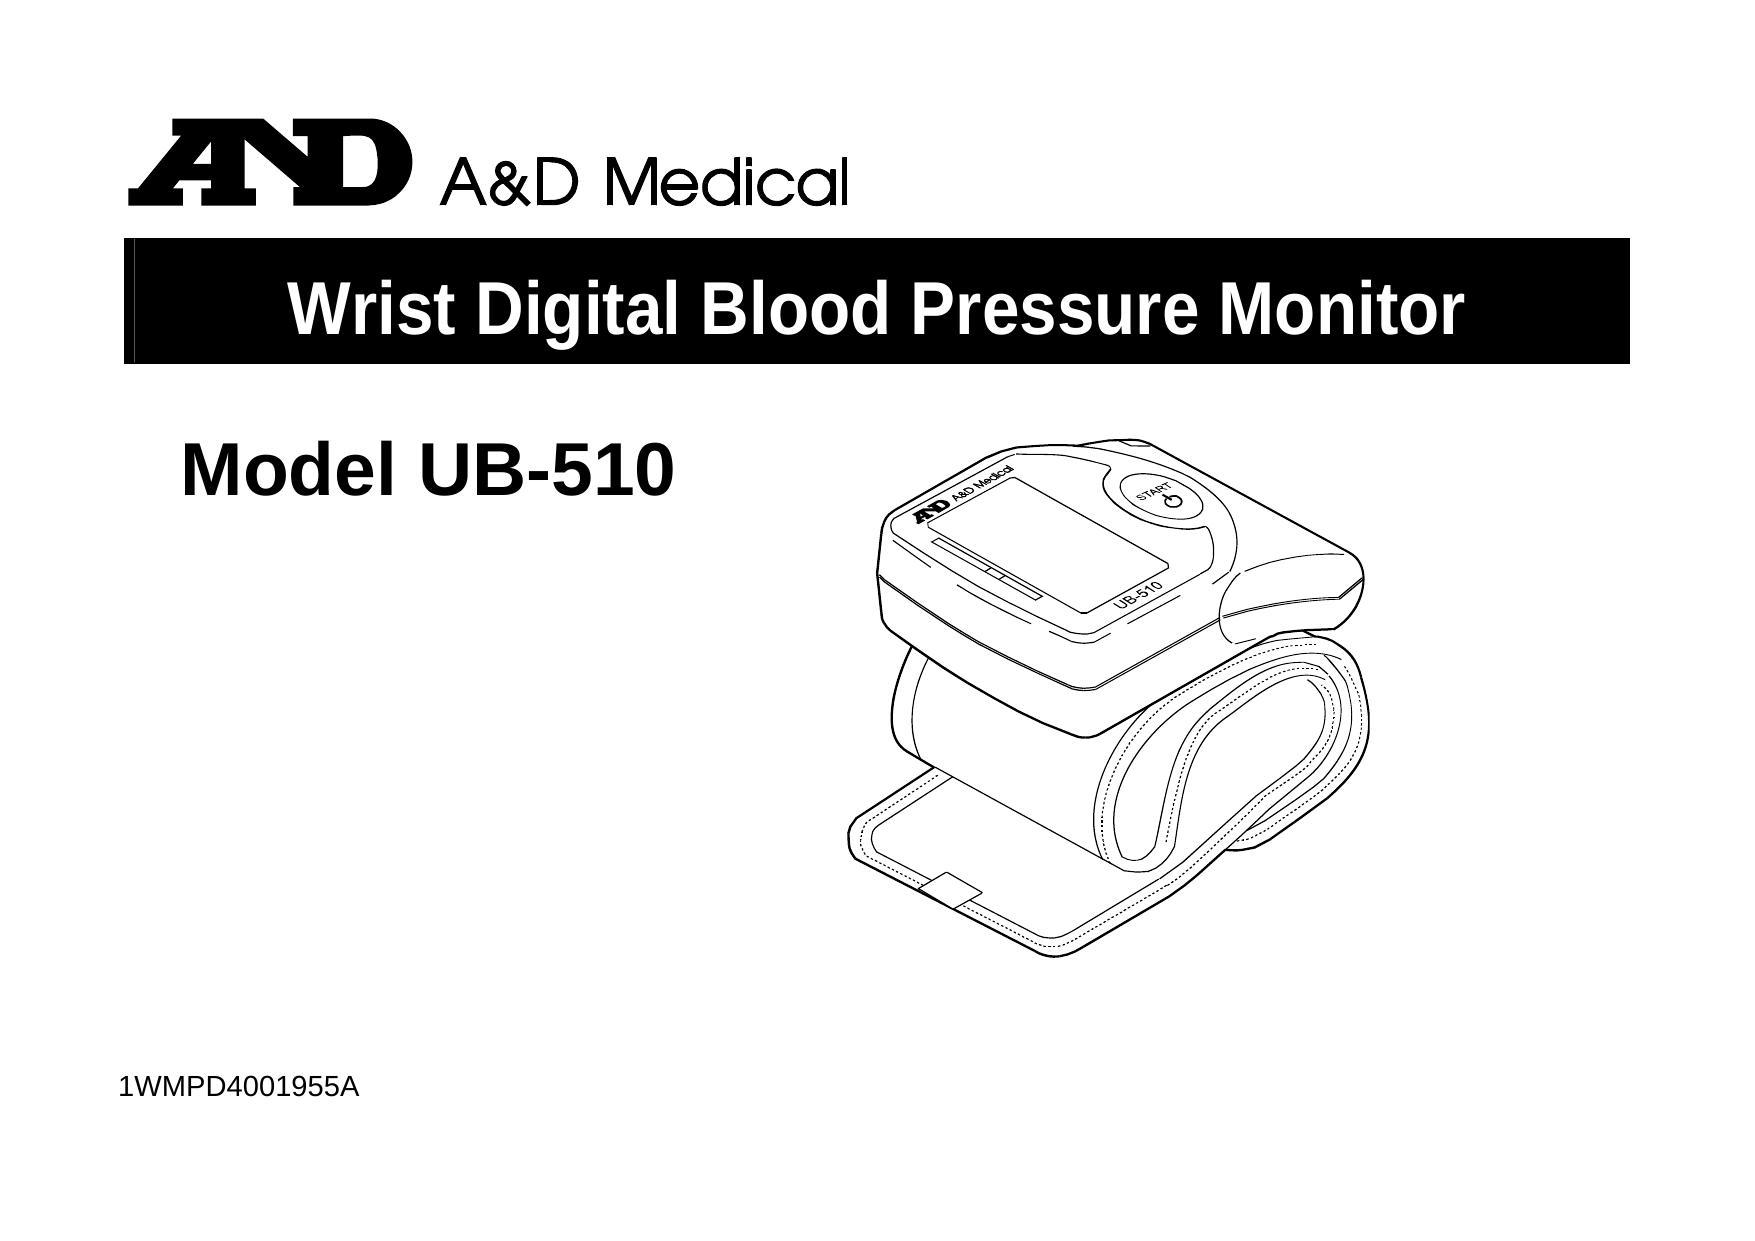 ad-medical-wrist-digital-blood-pressure-monitor-model-ub-510-user-manual.pdf